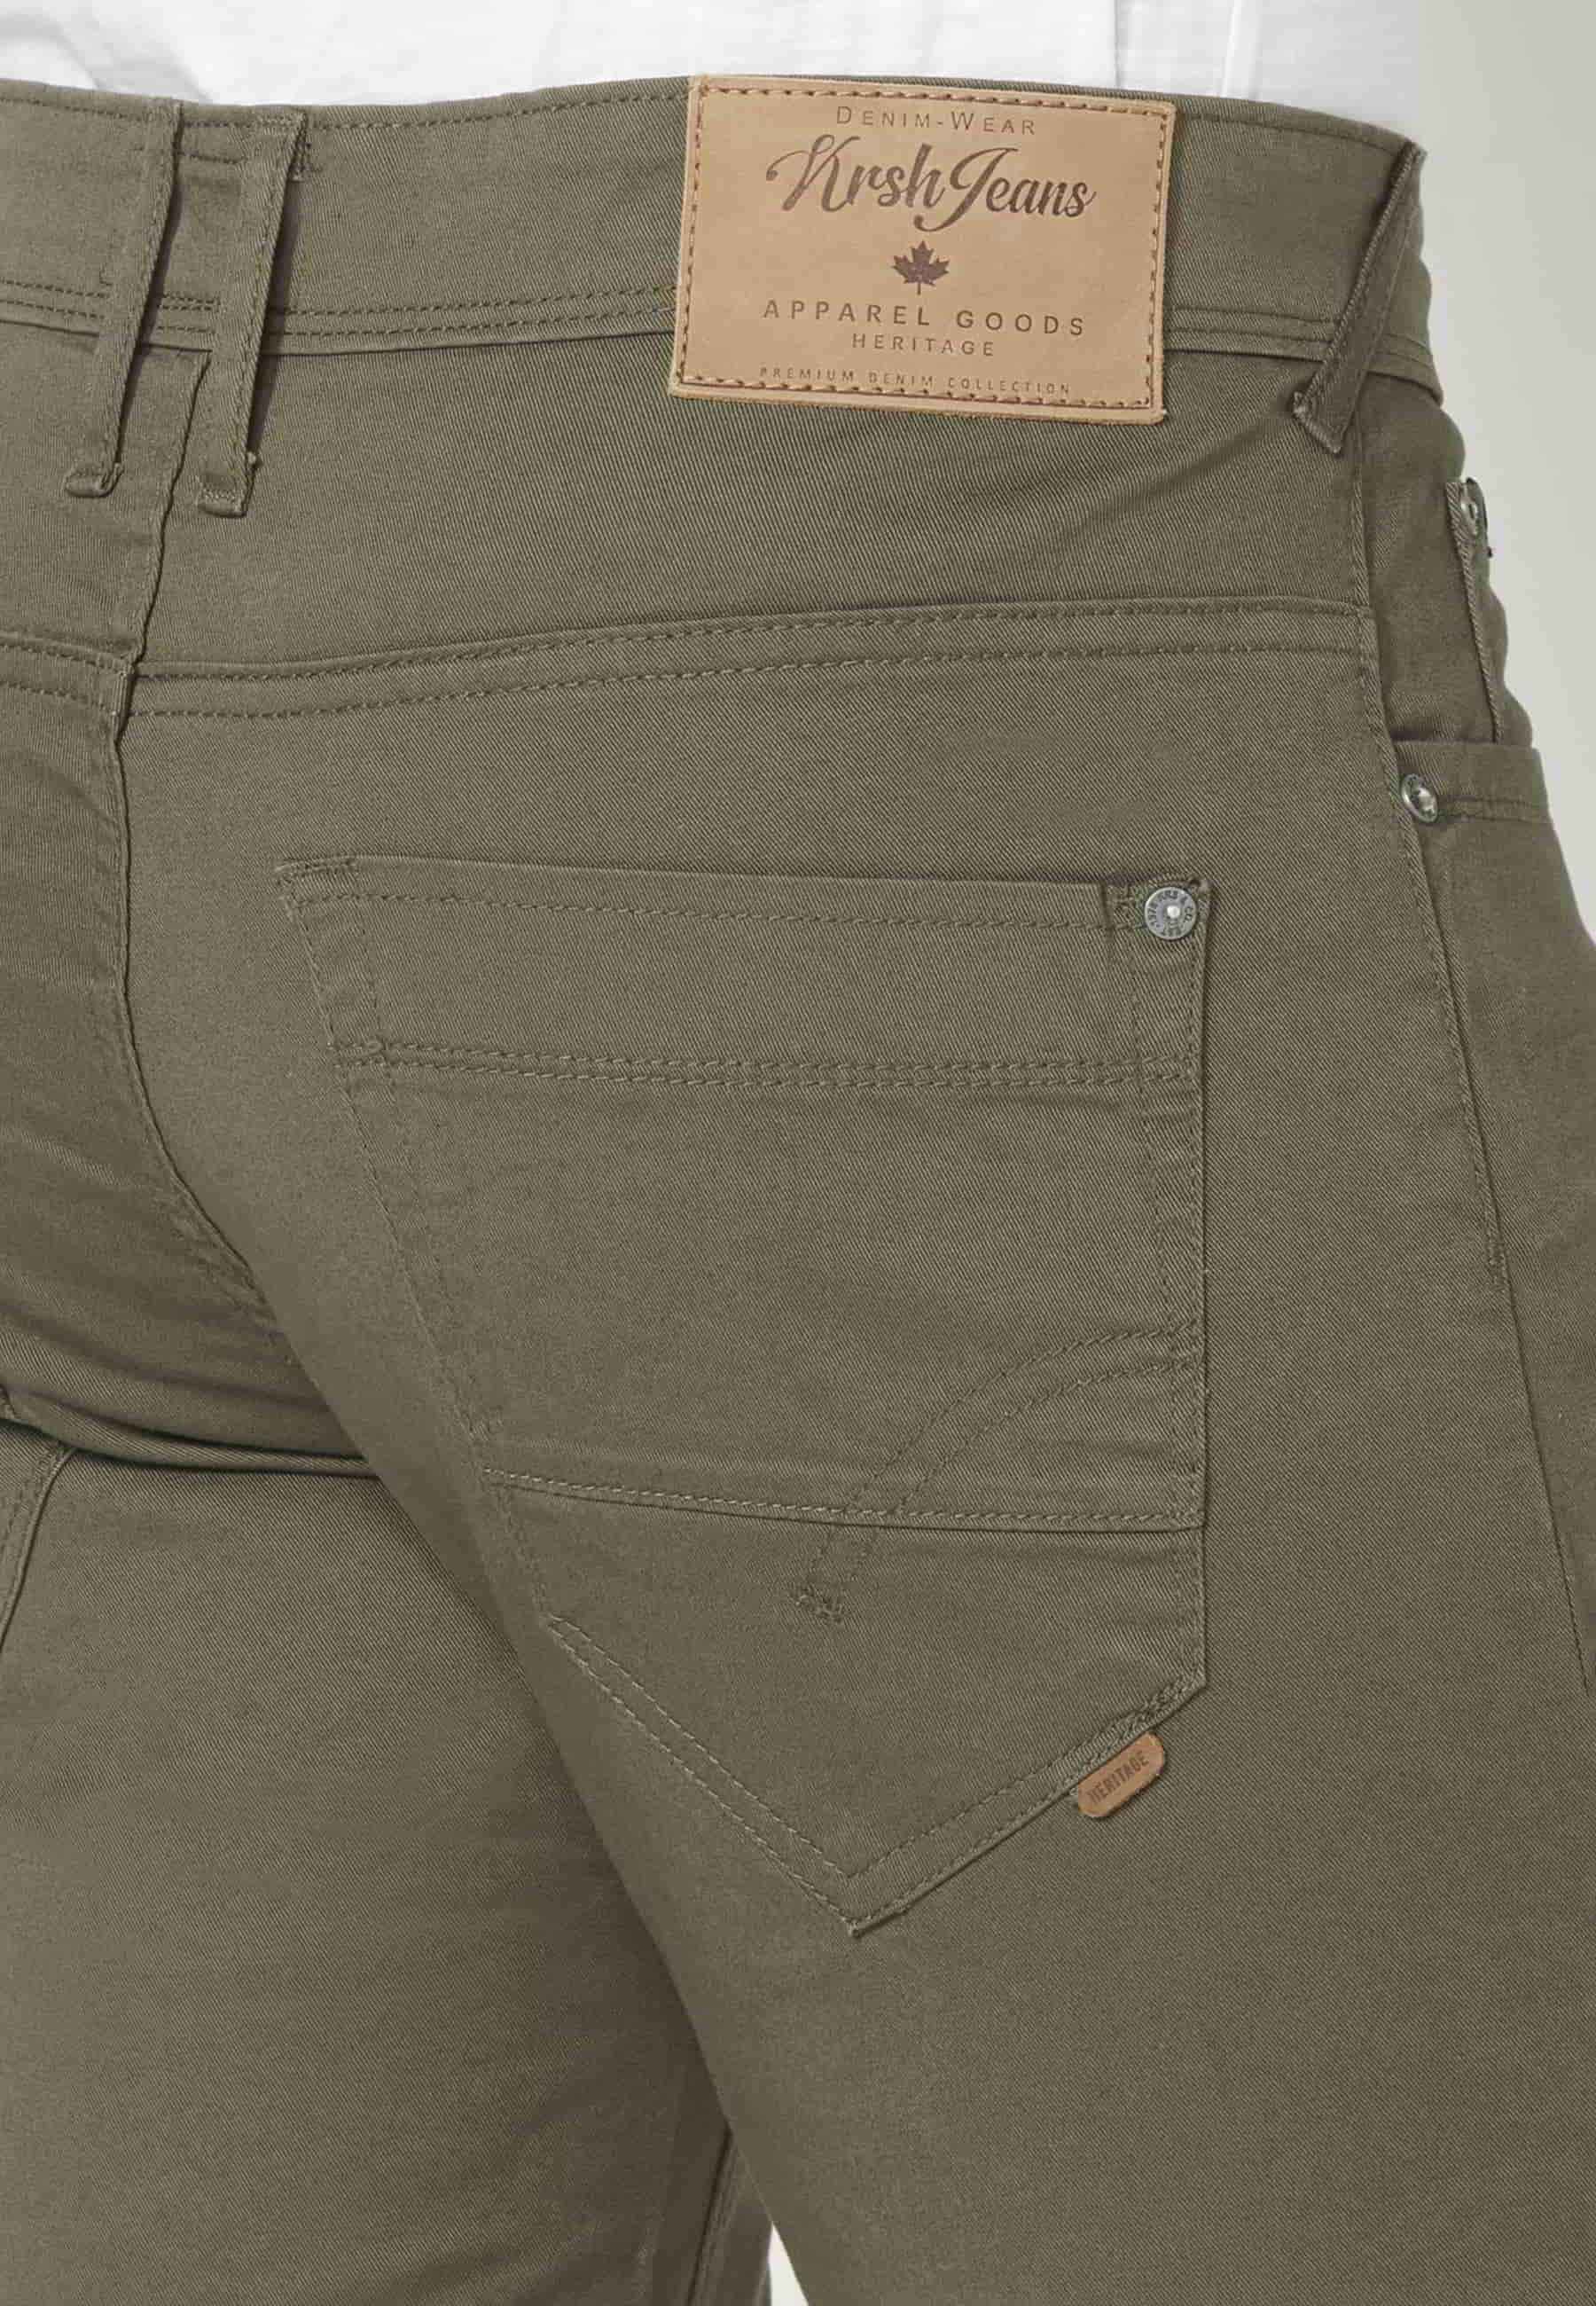 Pantalón corto short con cinco bolsillos de color Verde para Hombre